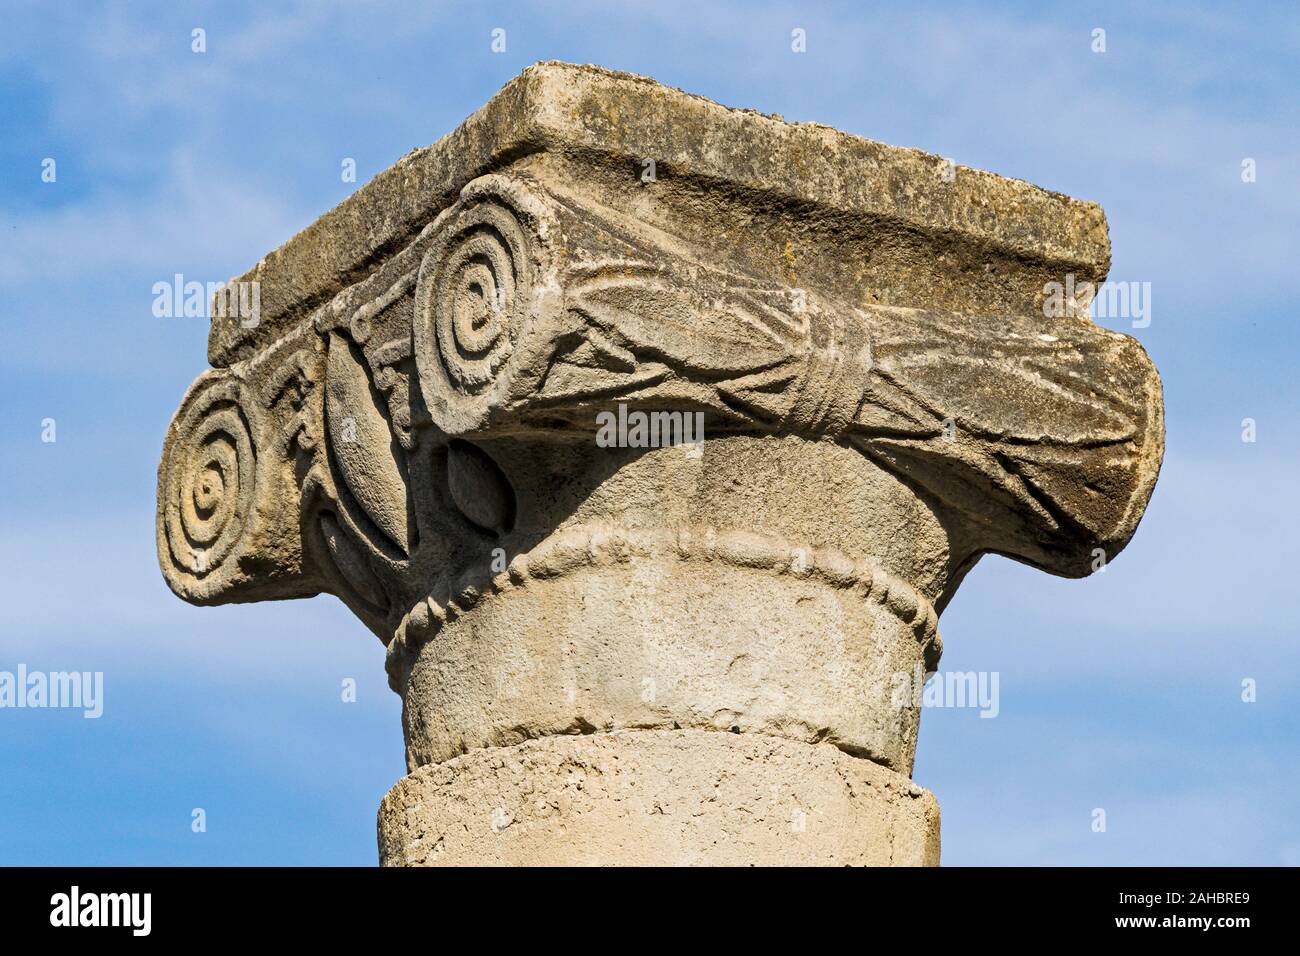 Libre d'un grec classique ionic capital lors de l'ère talmudique à Katzrin site archéologique en Israël contre un partiellement nuageux ciel bleu Banque D'Images